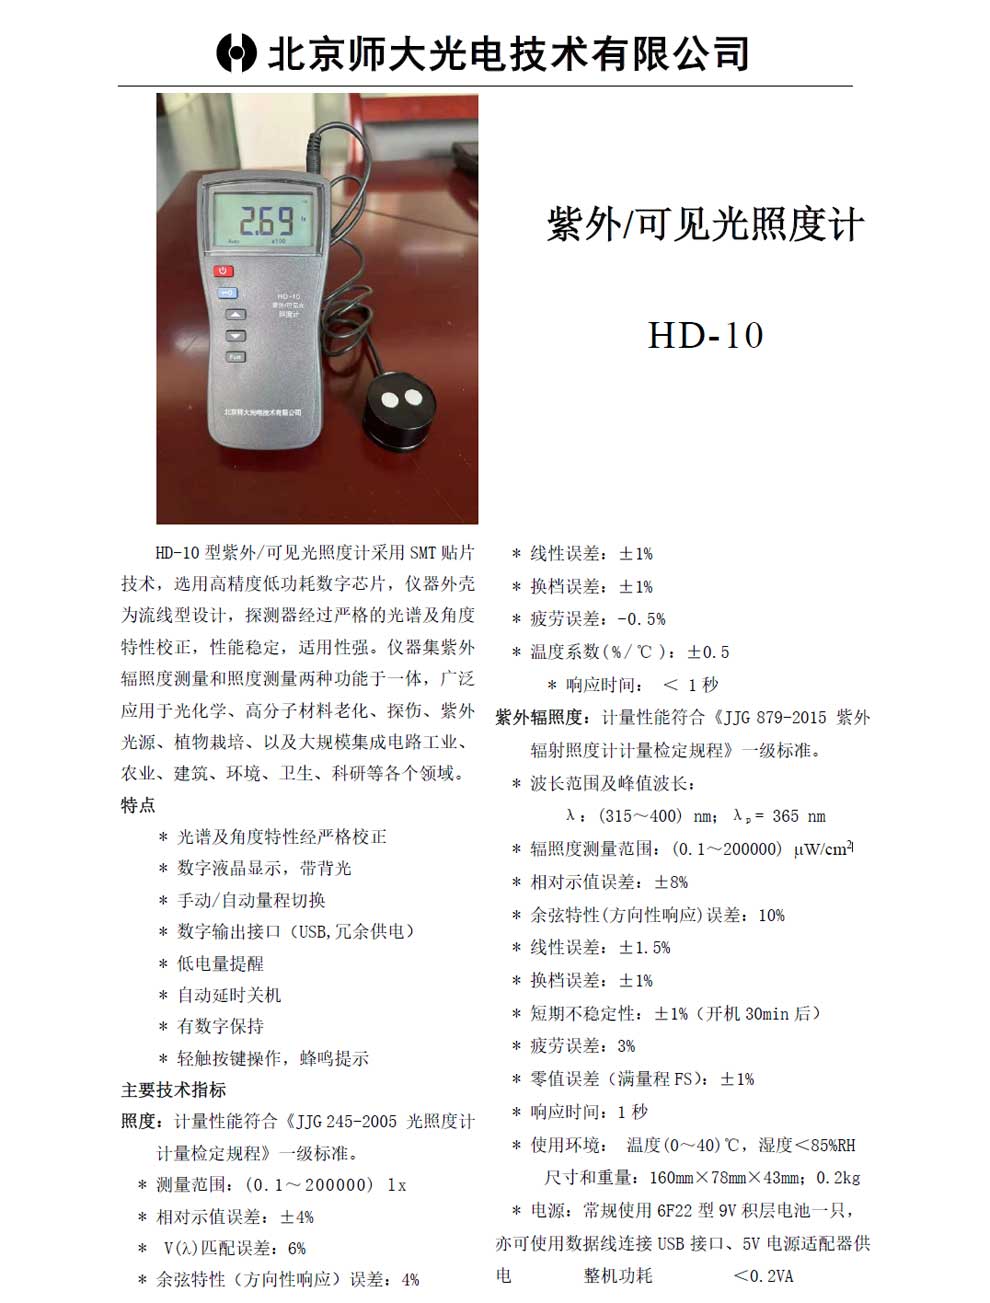 HD-10型-彩页.jpg